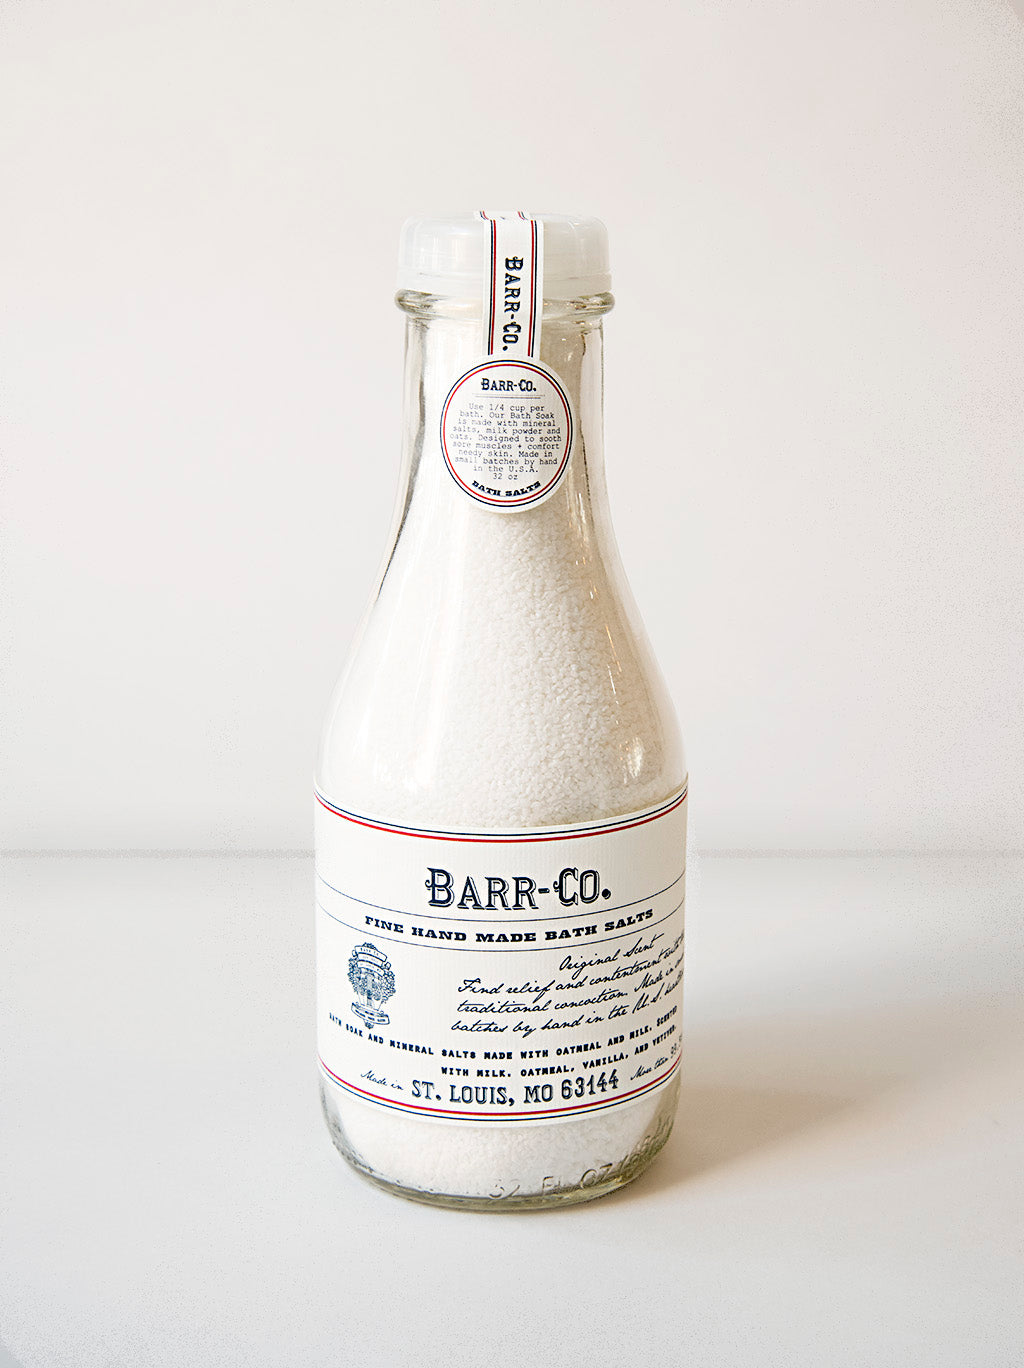 Barr-Co. Fine Handmade Bath Salts